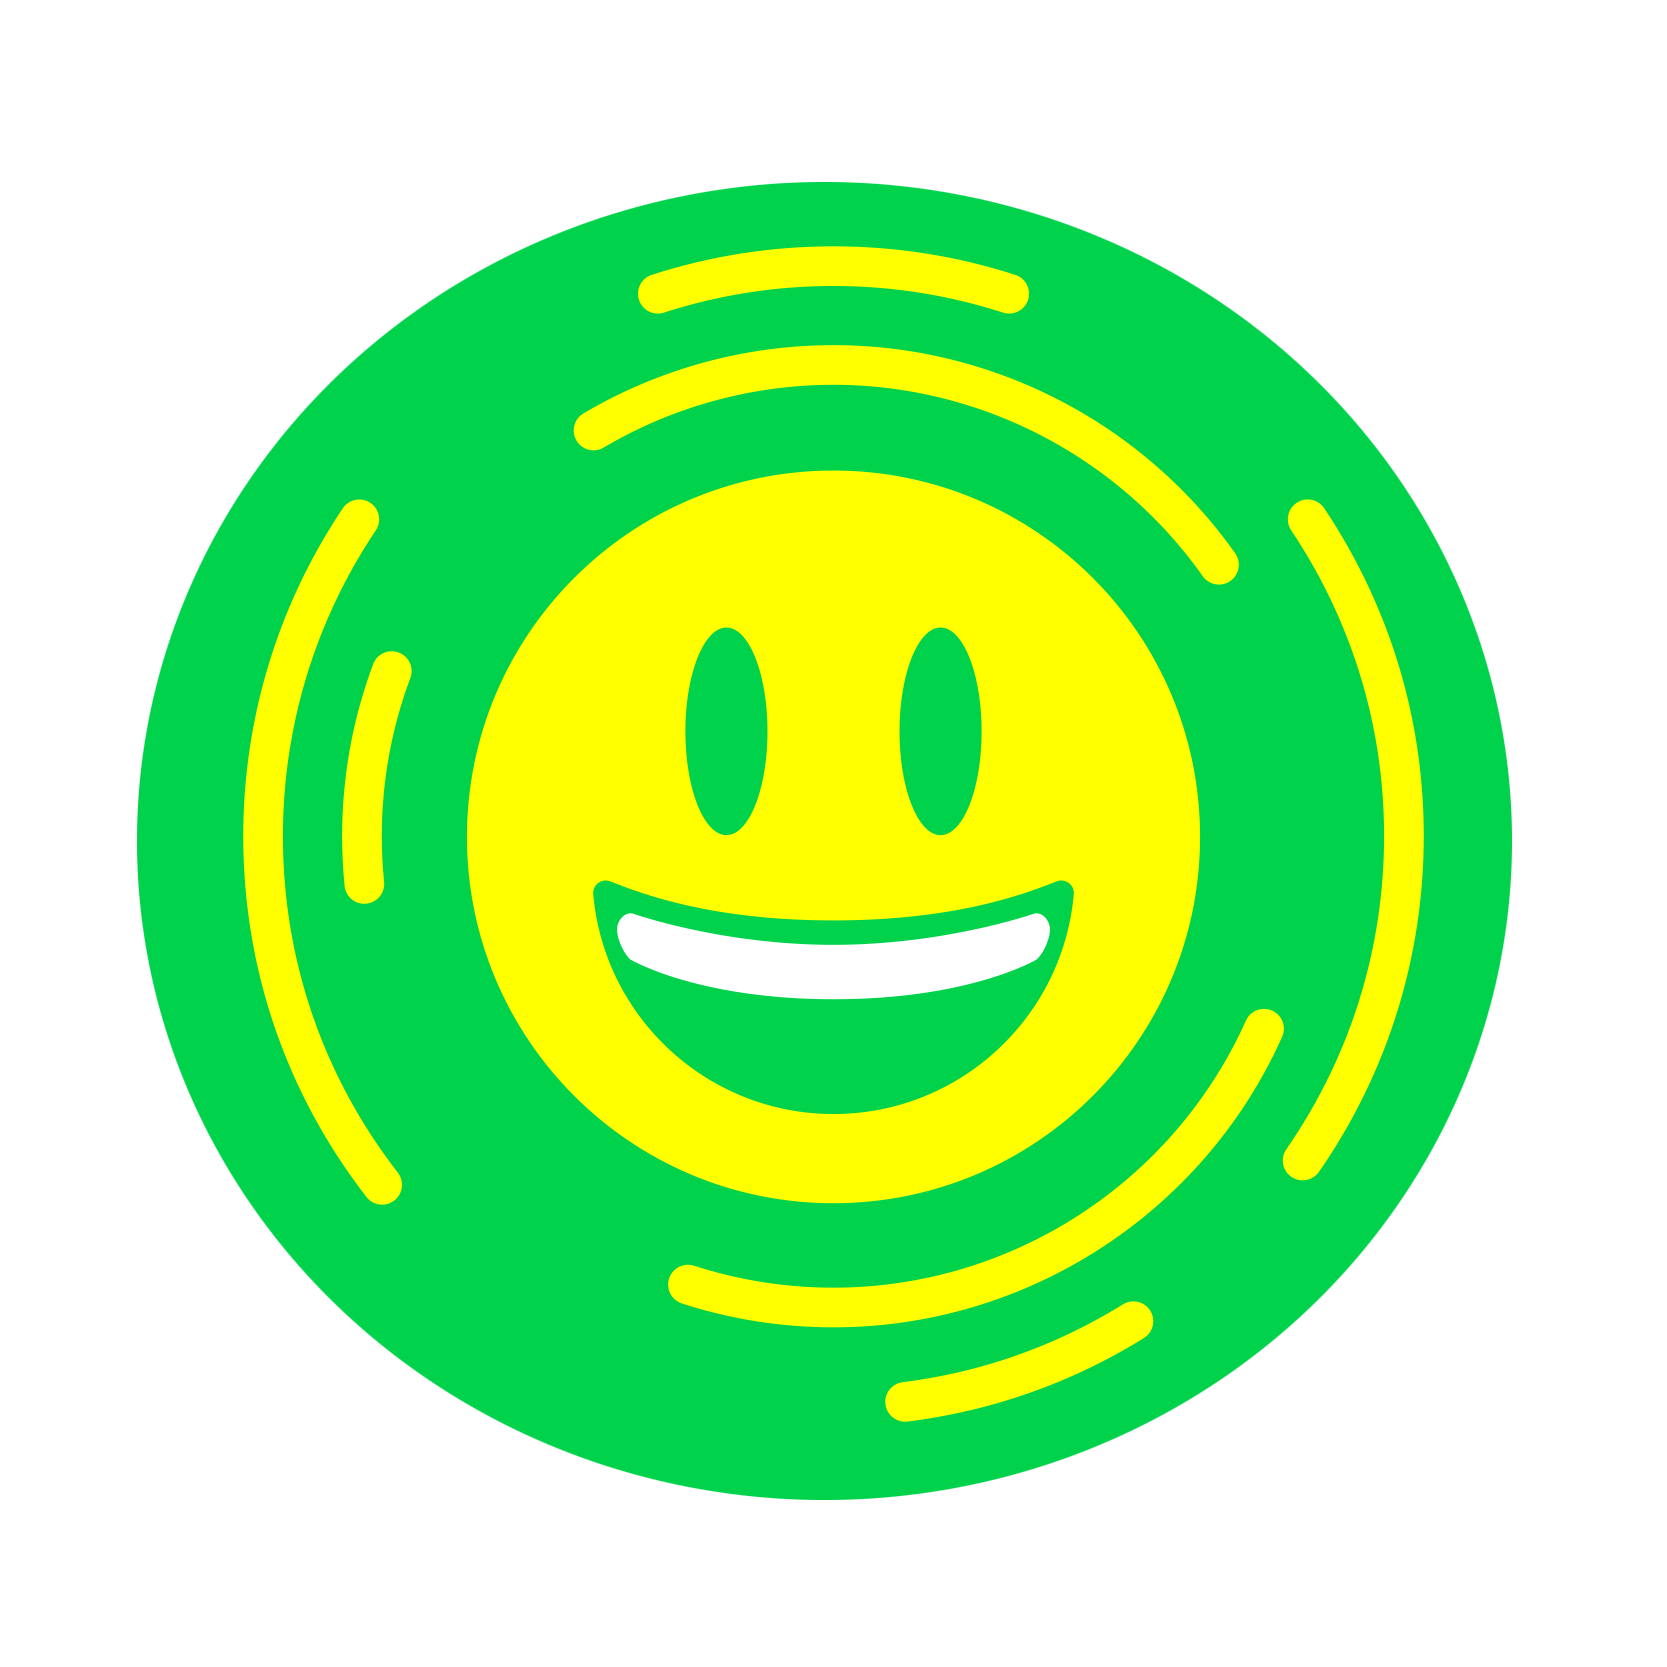 Happy Emoji Logo - Emojitones Messenger - every emoji has a sound to send to friends